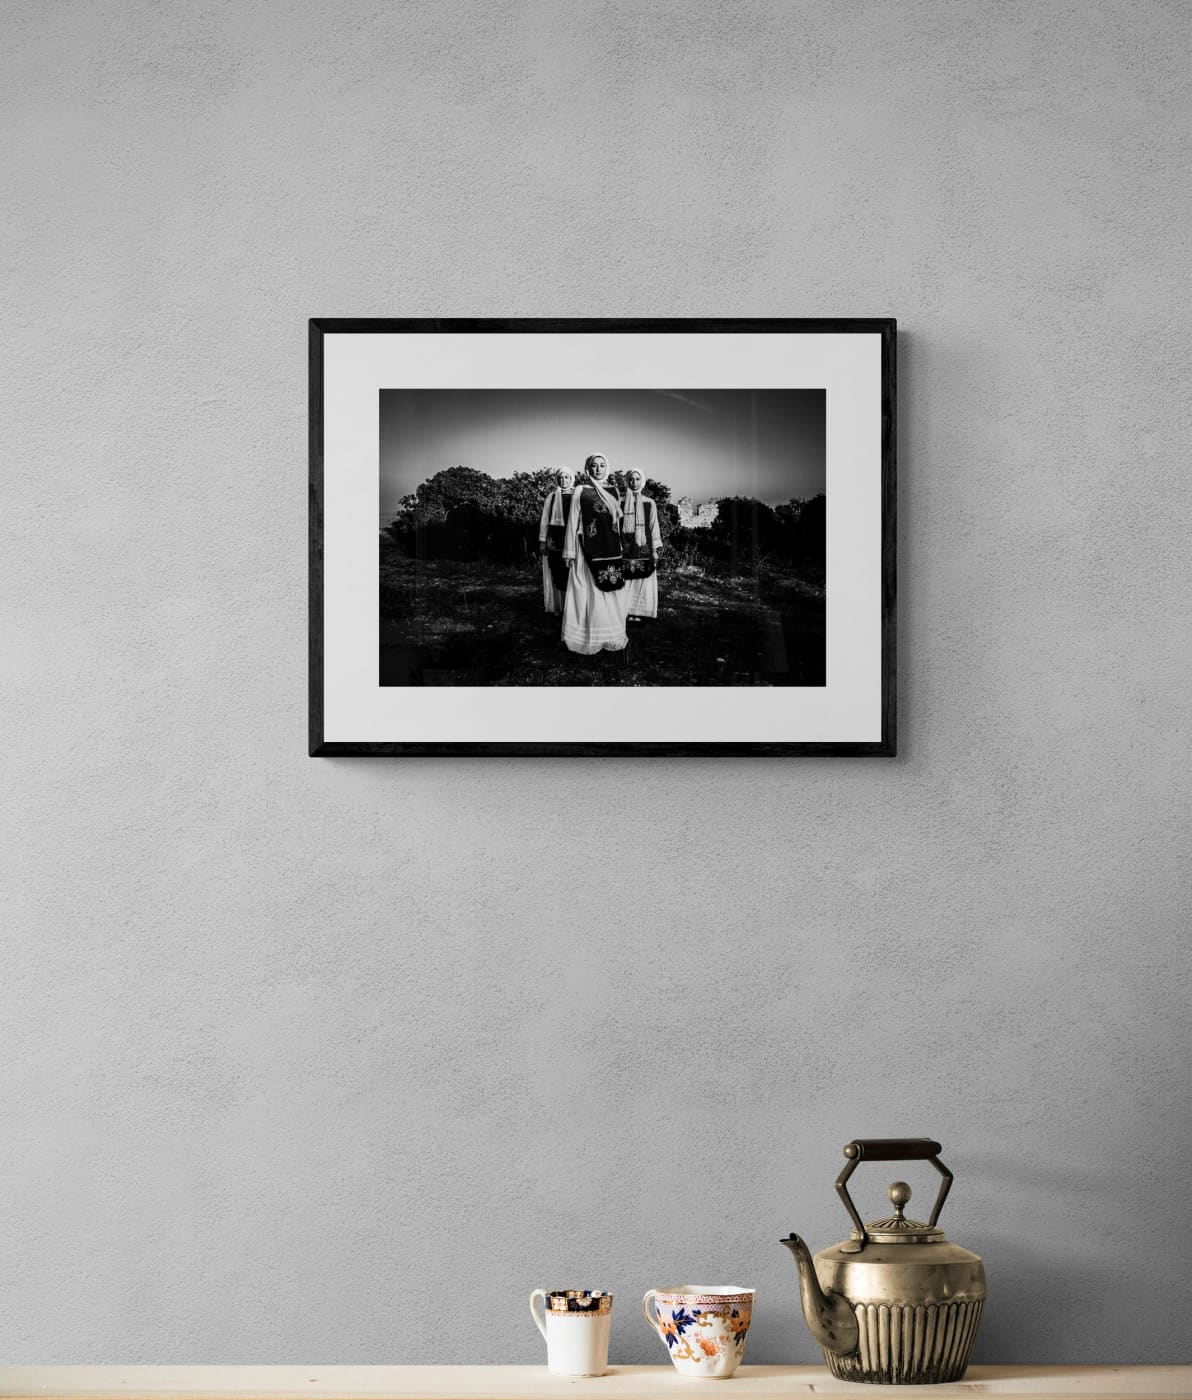 Black and White Photography Wall Art Greece | Nenita costumes Ionia Chios island Greece by George Tatakis - single framed photo